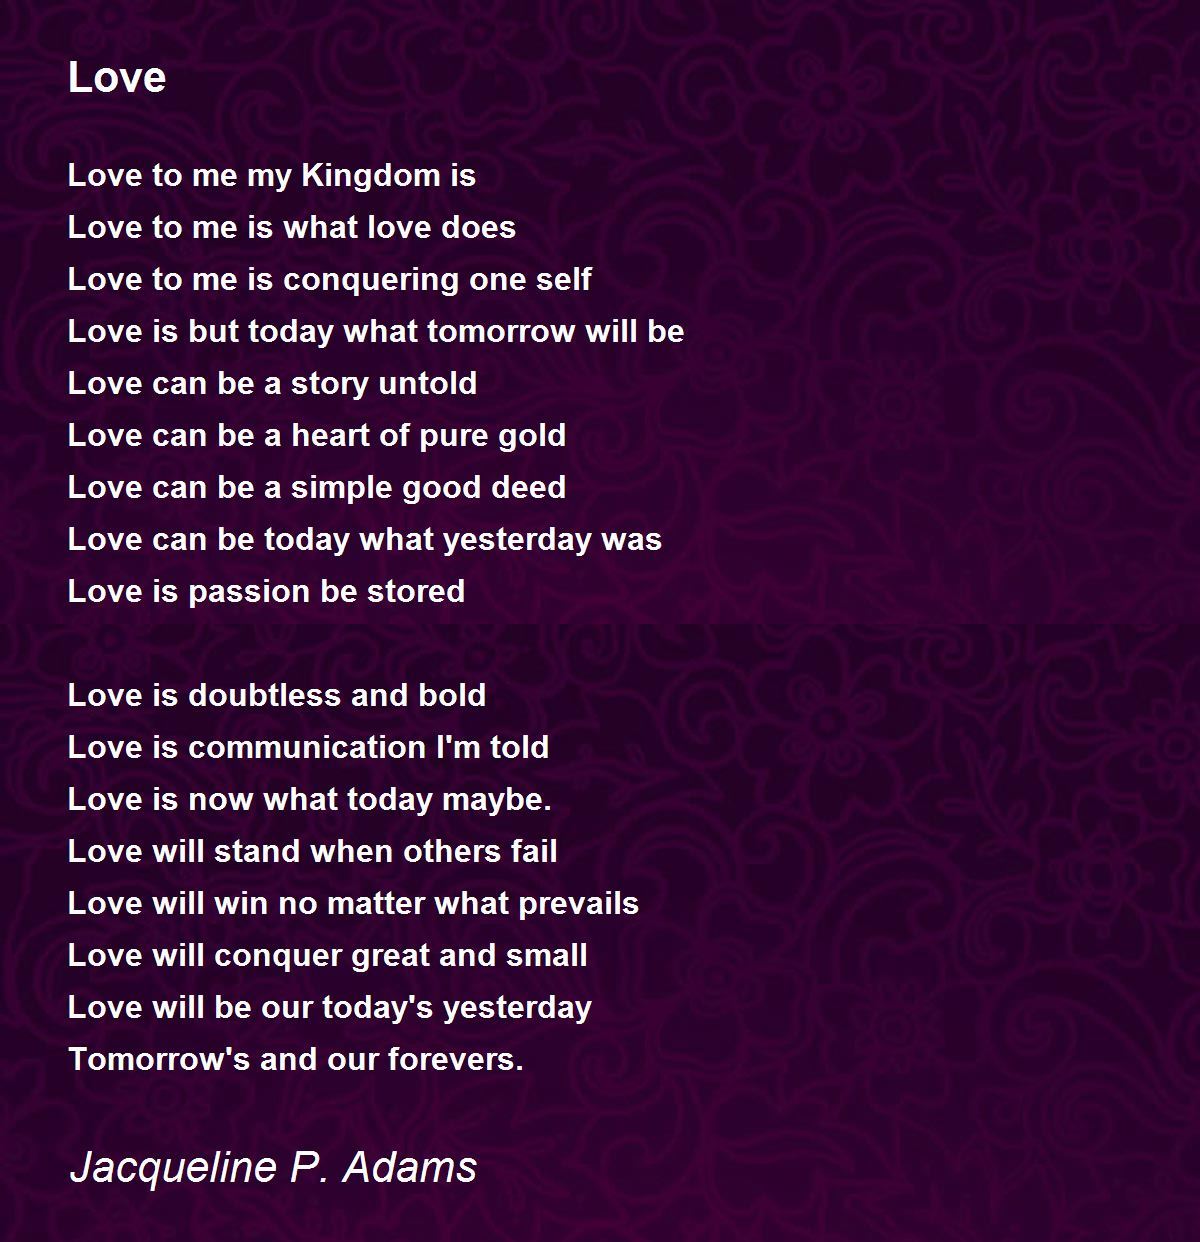 Love - Love Poem by Jacqueline P. Adams